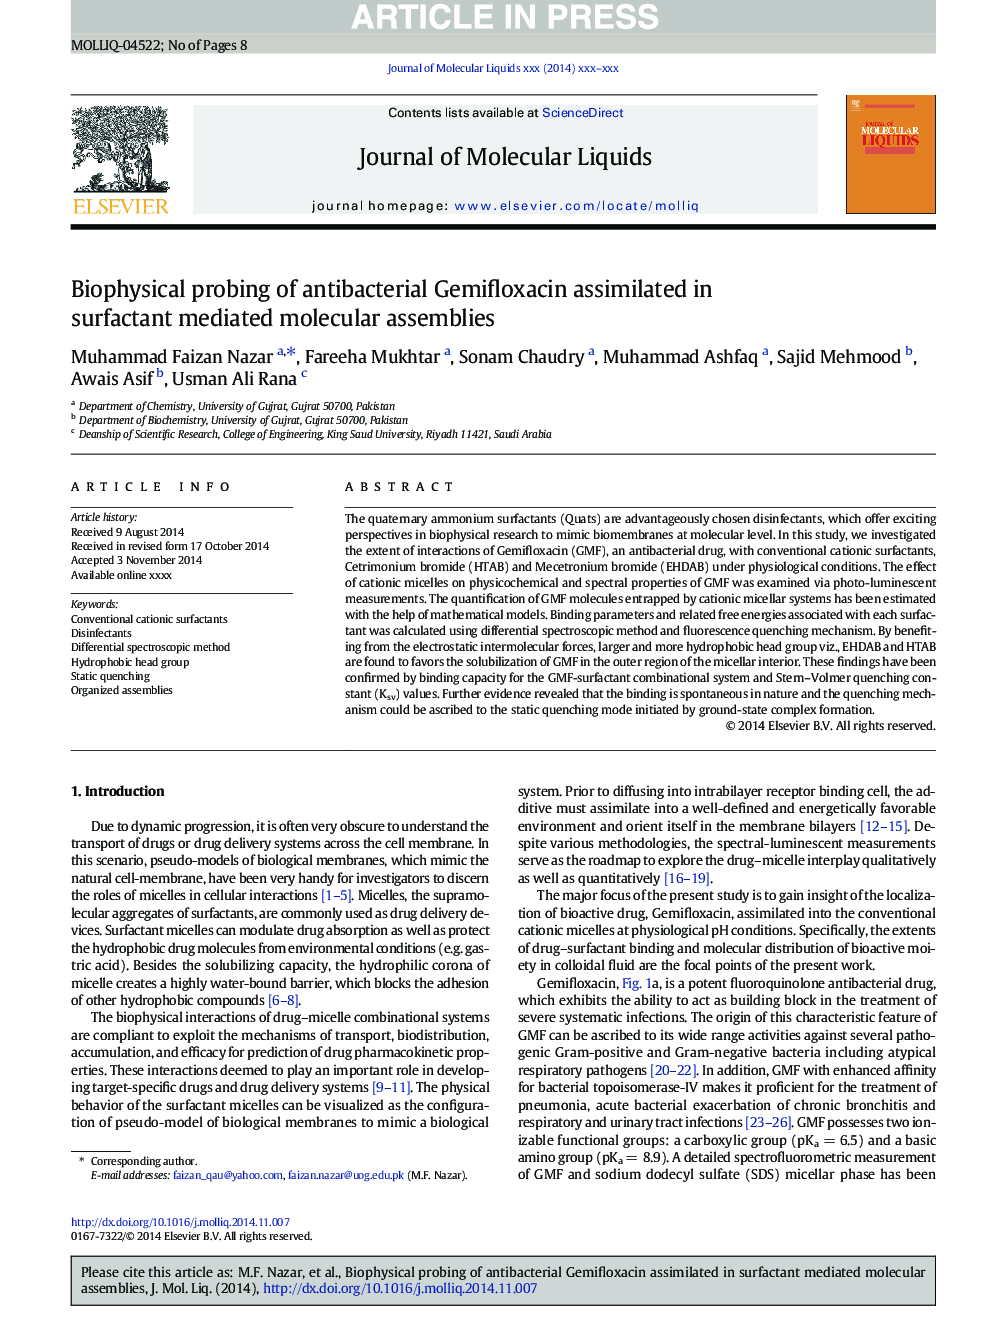 Biophysical probing of antibacterial Gemifloxacin assimilated in surfactant mediated molecular assemblies